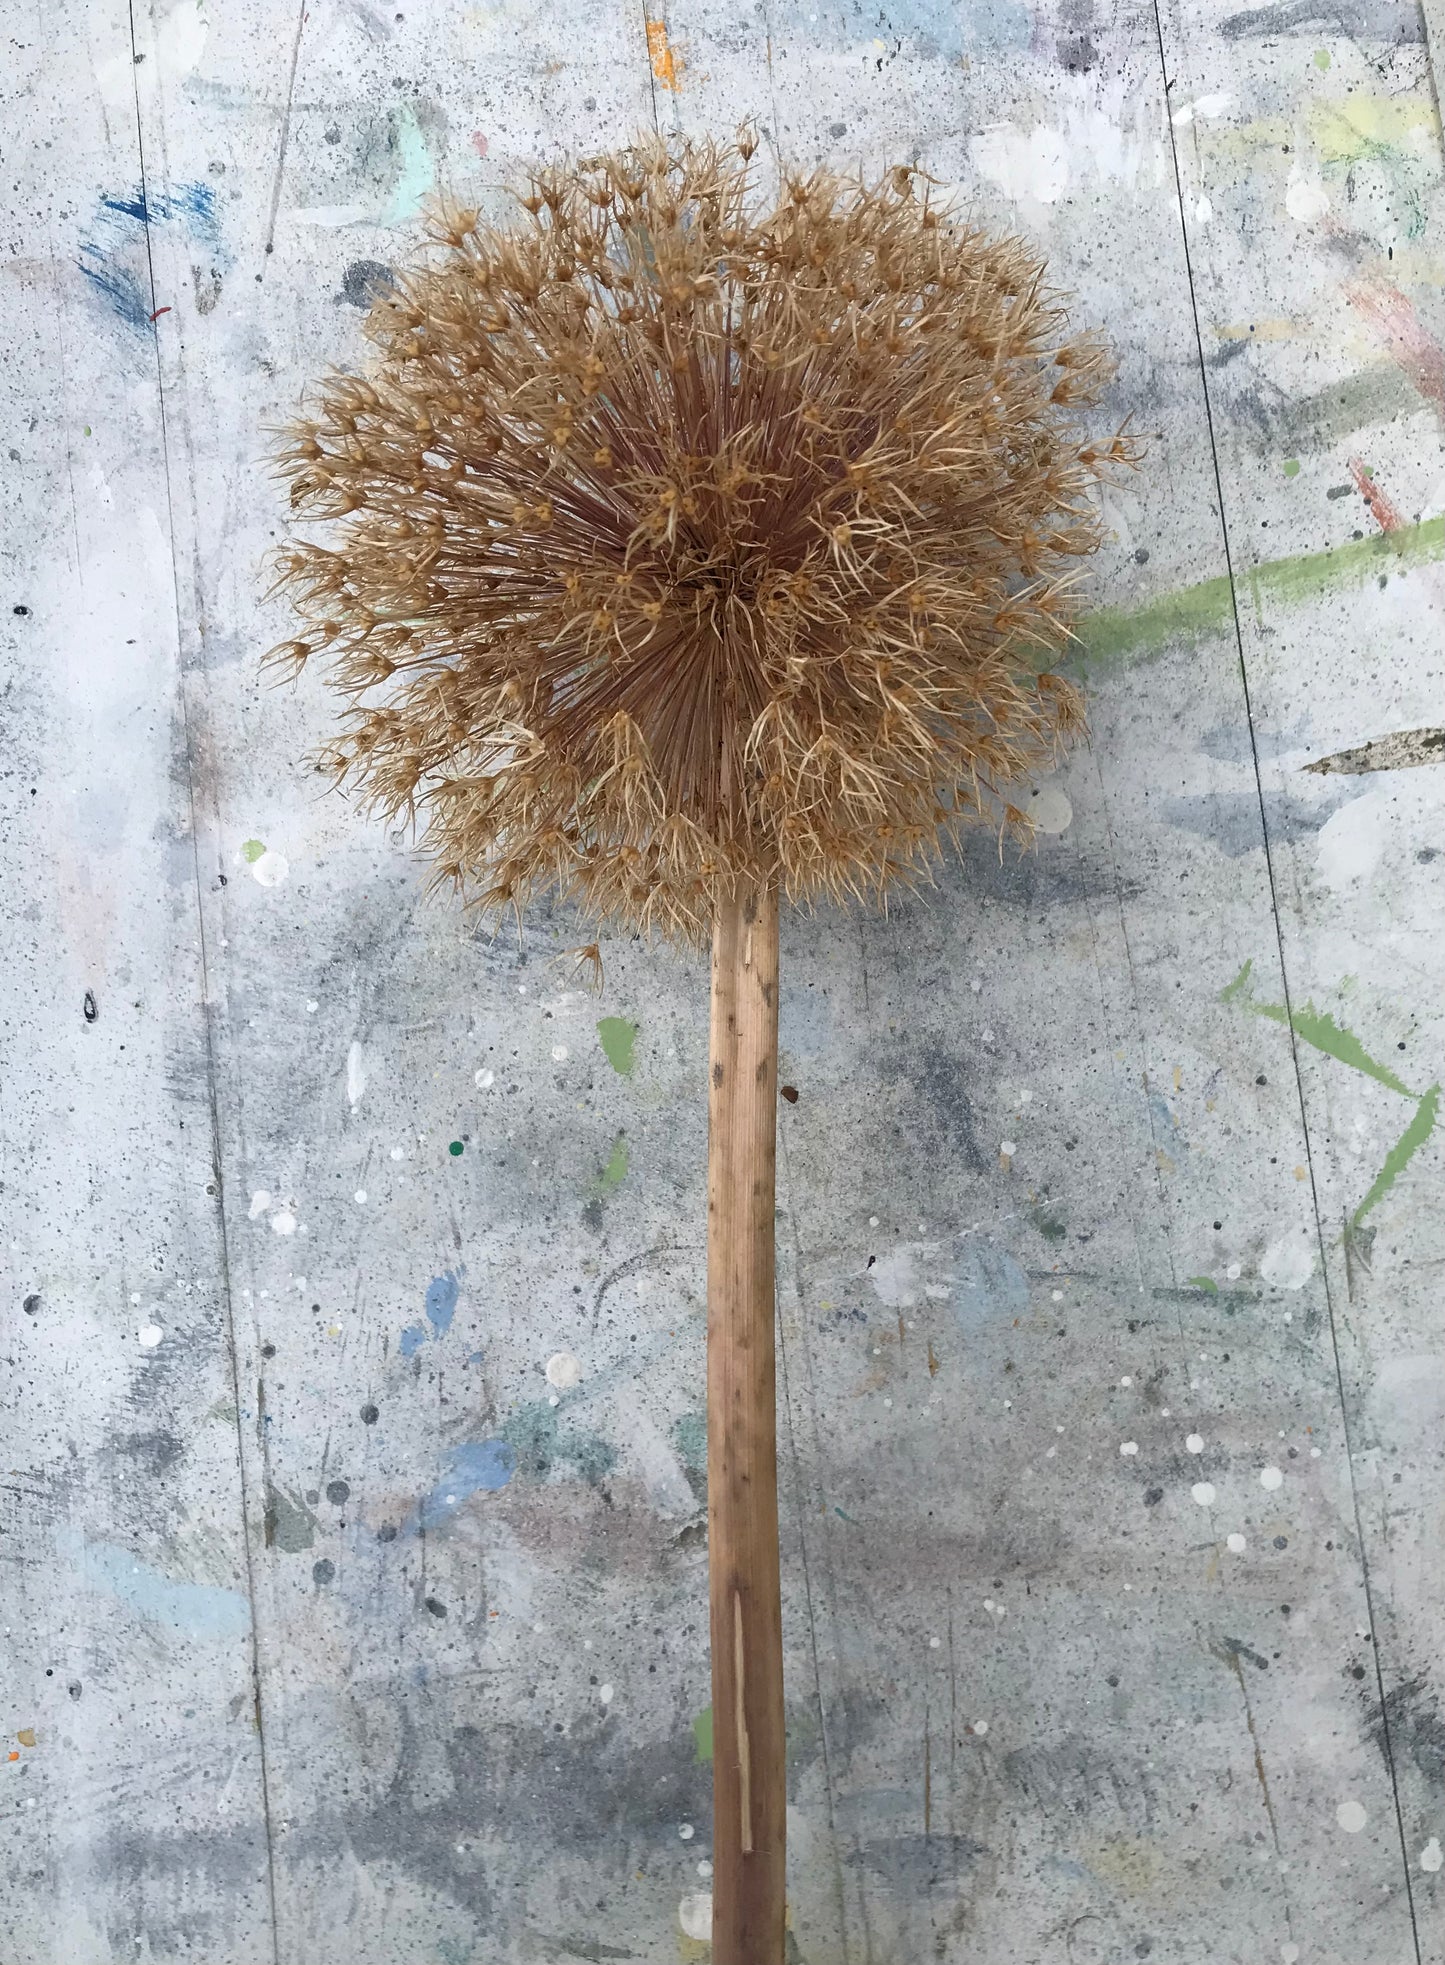 Dried Giant Alium flower seed heads